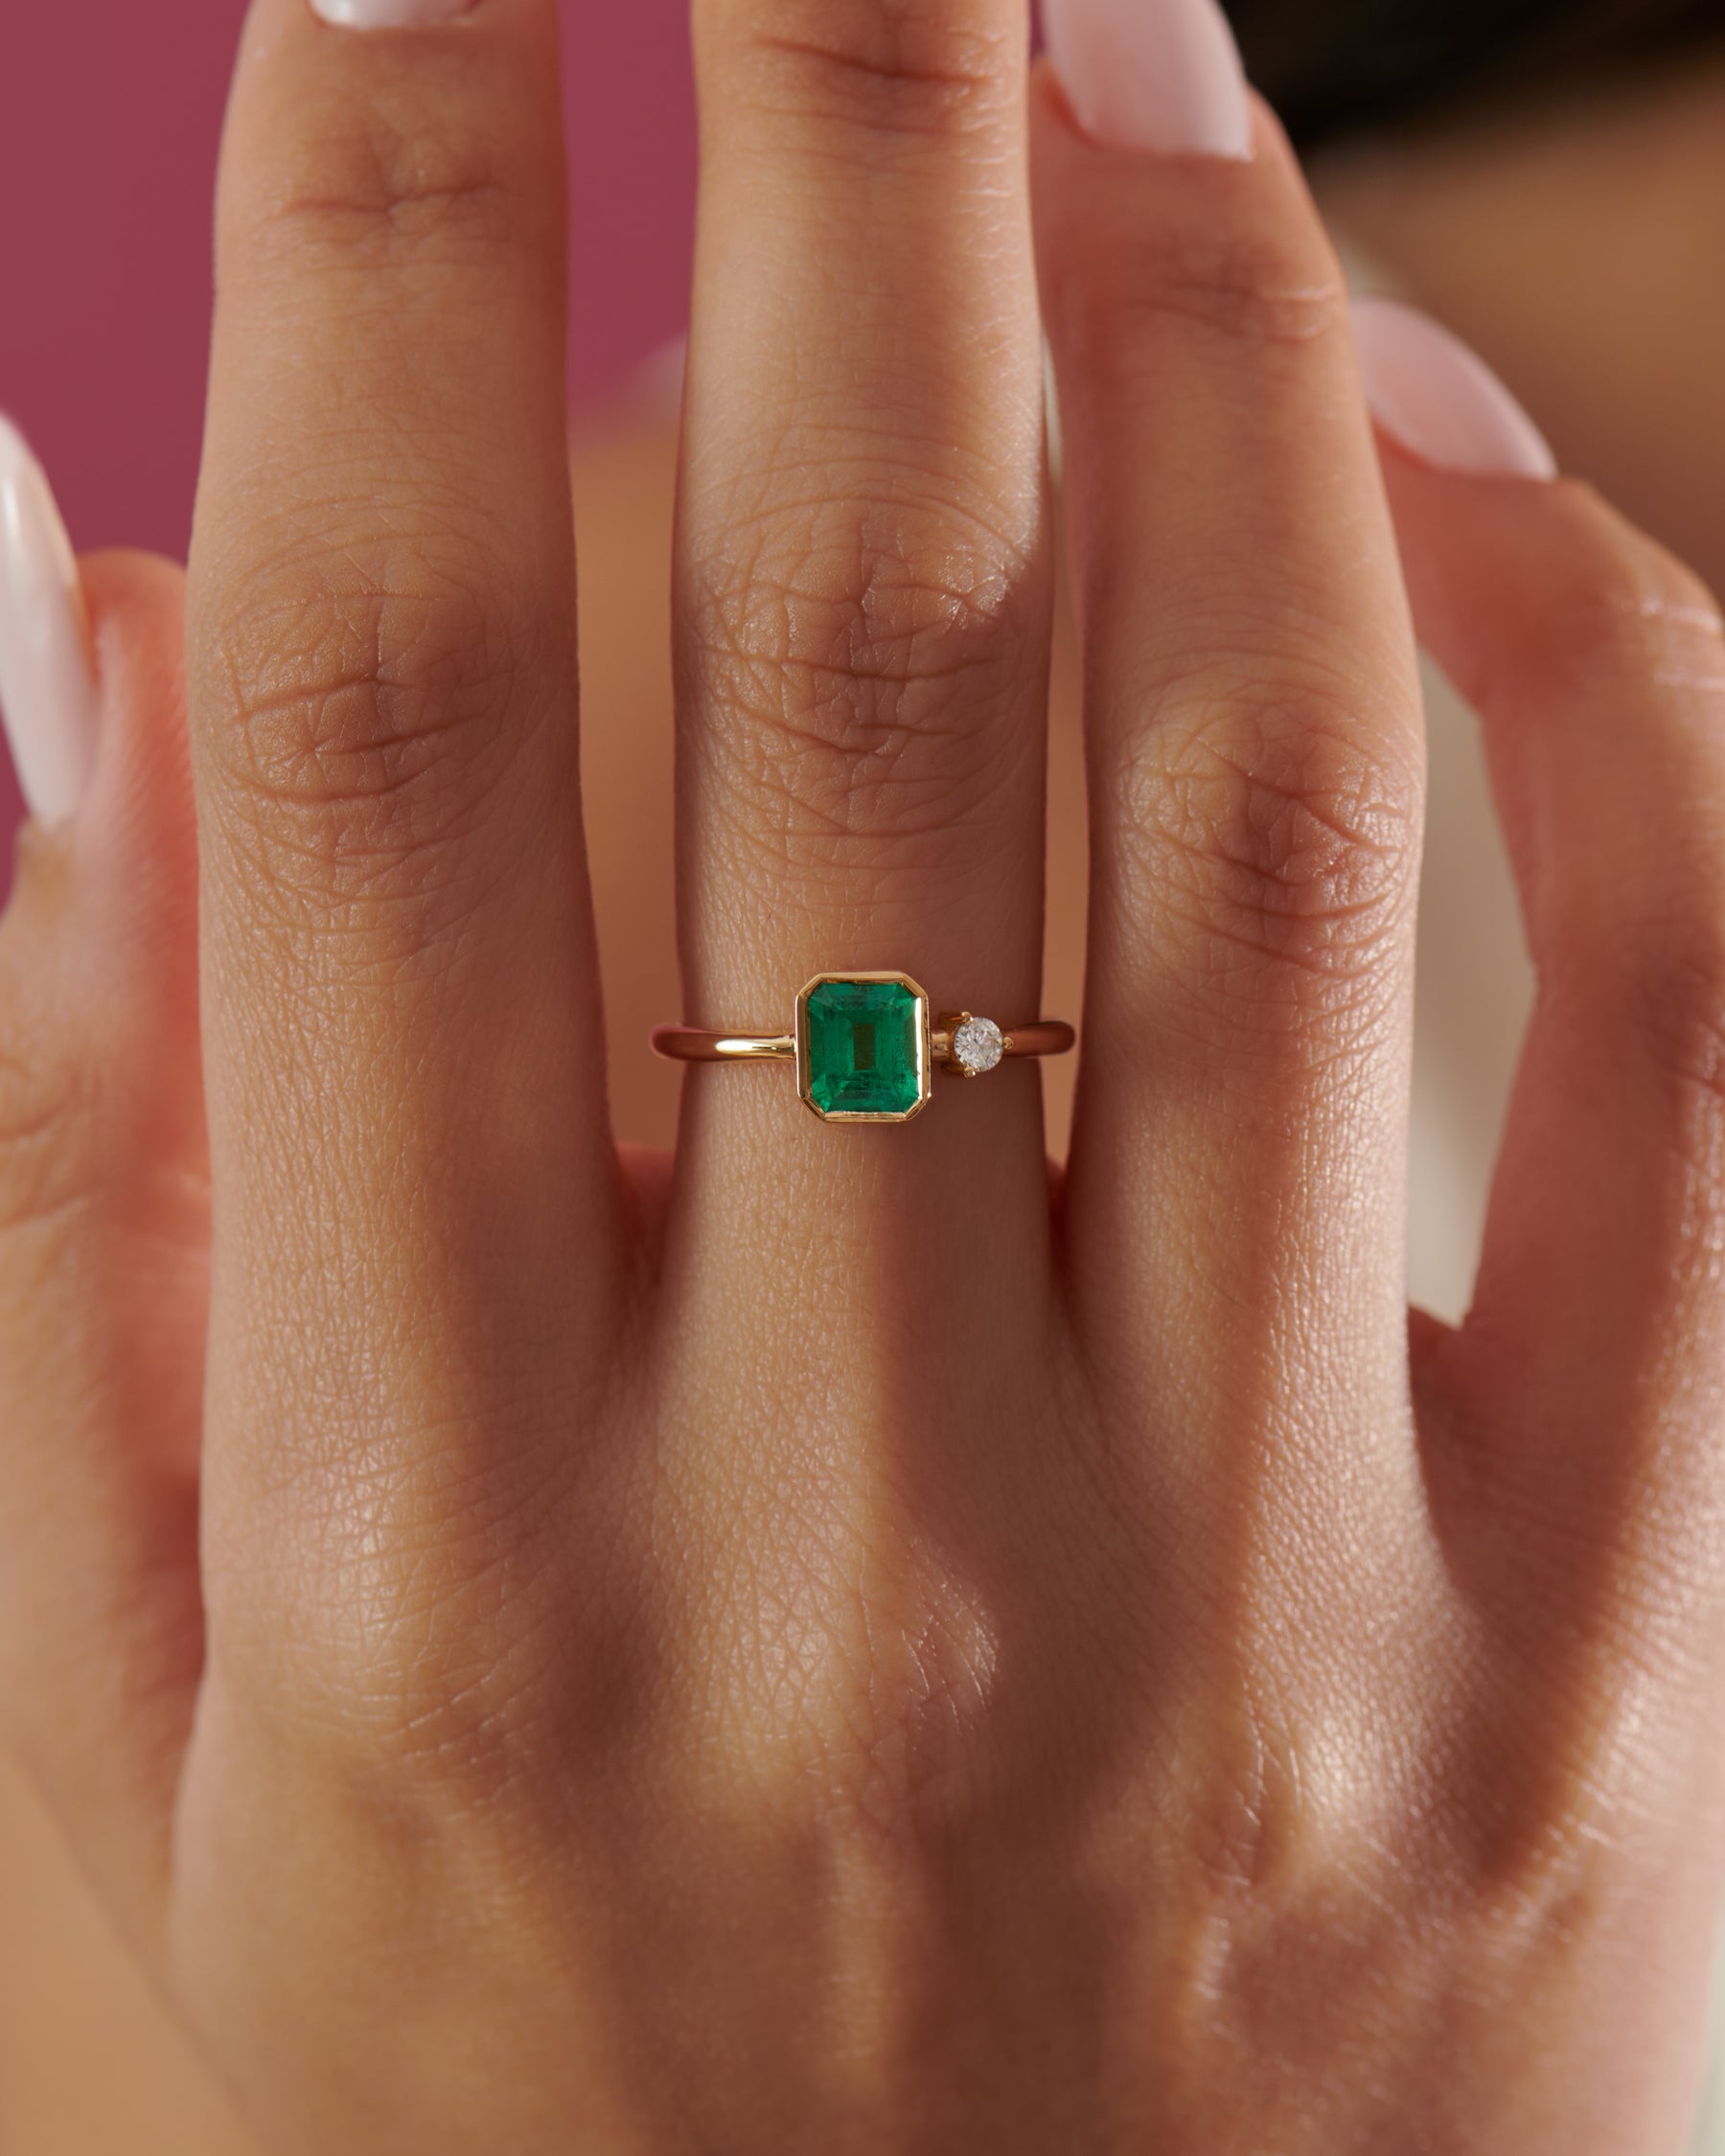 Natural emerald and diamonds engagement ring, elvish nature inspired gold  ring / Undina | Eden Garden Jewelry™